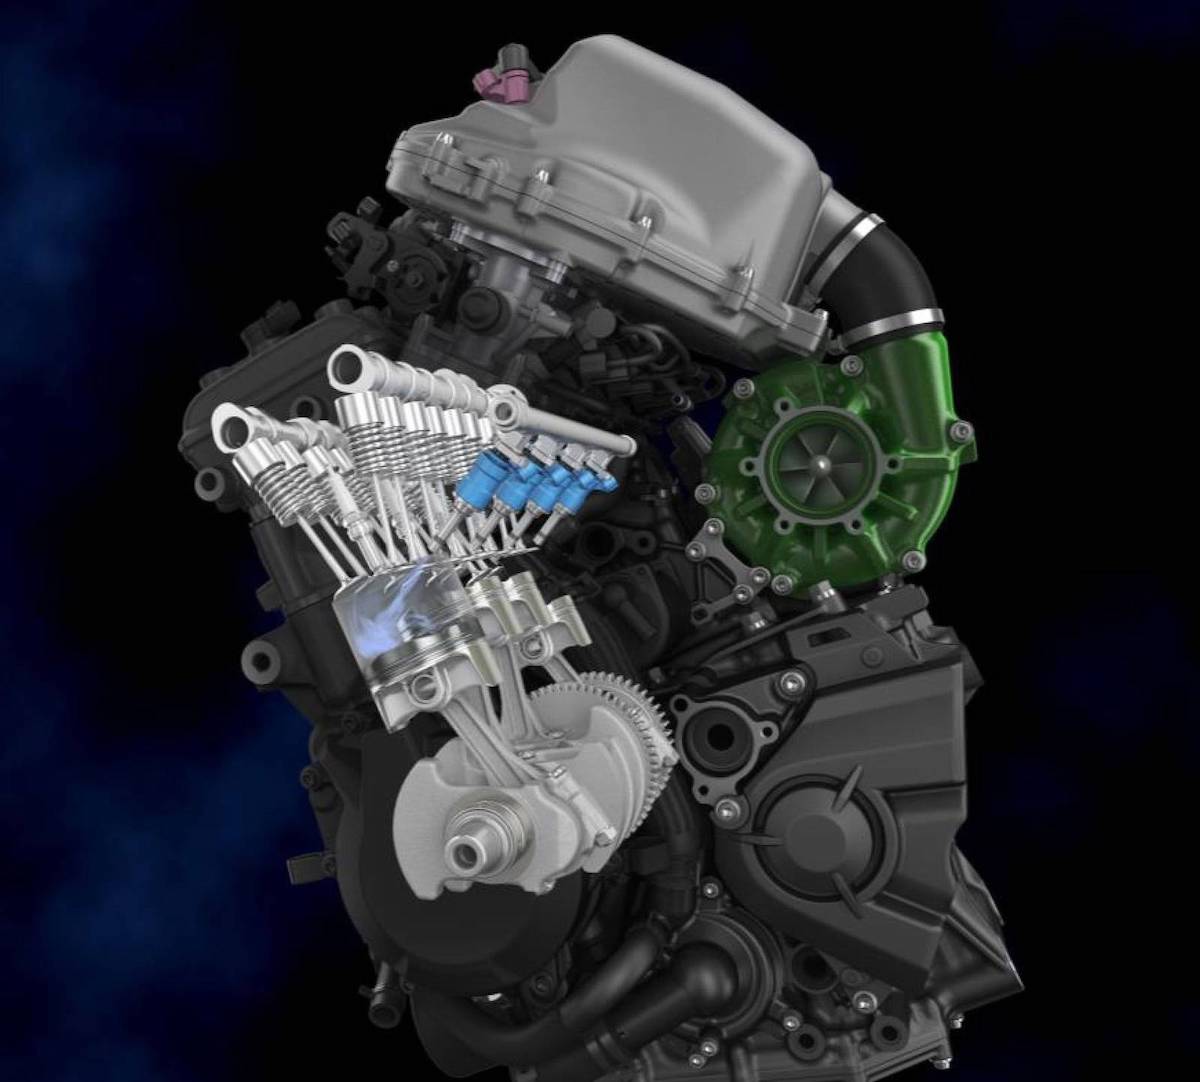 A hydrogen engine, courtesy of Kawasaki and potentially Yamaha